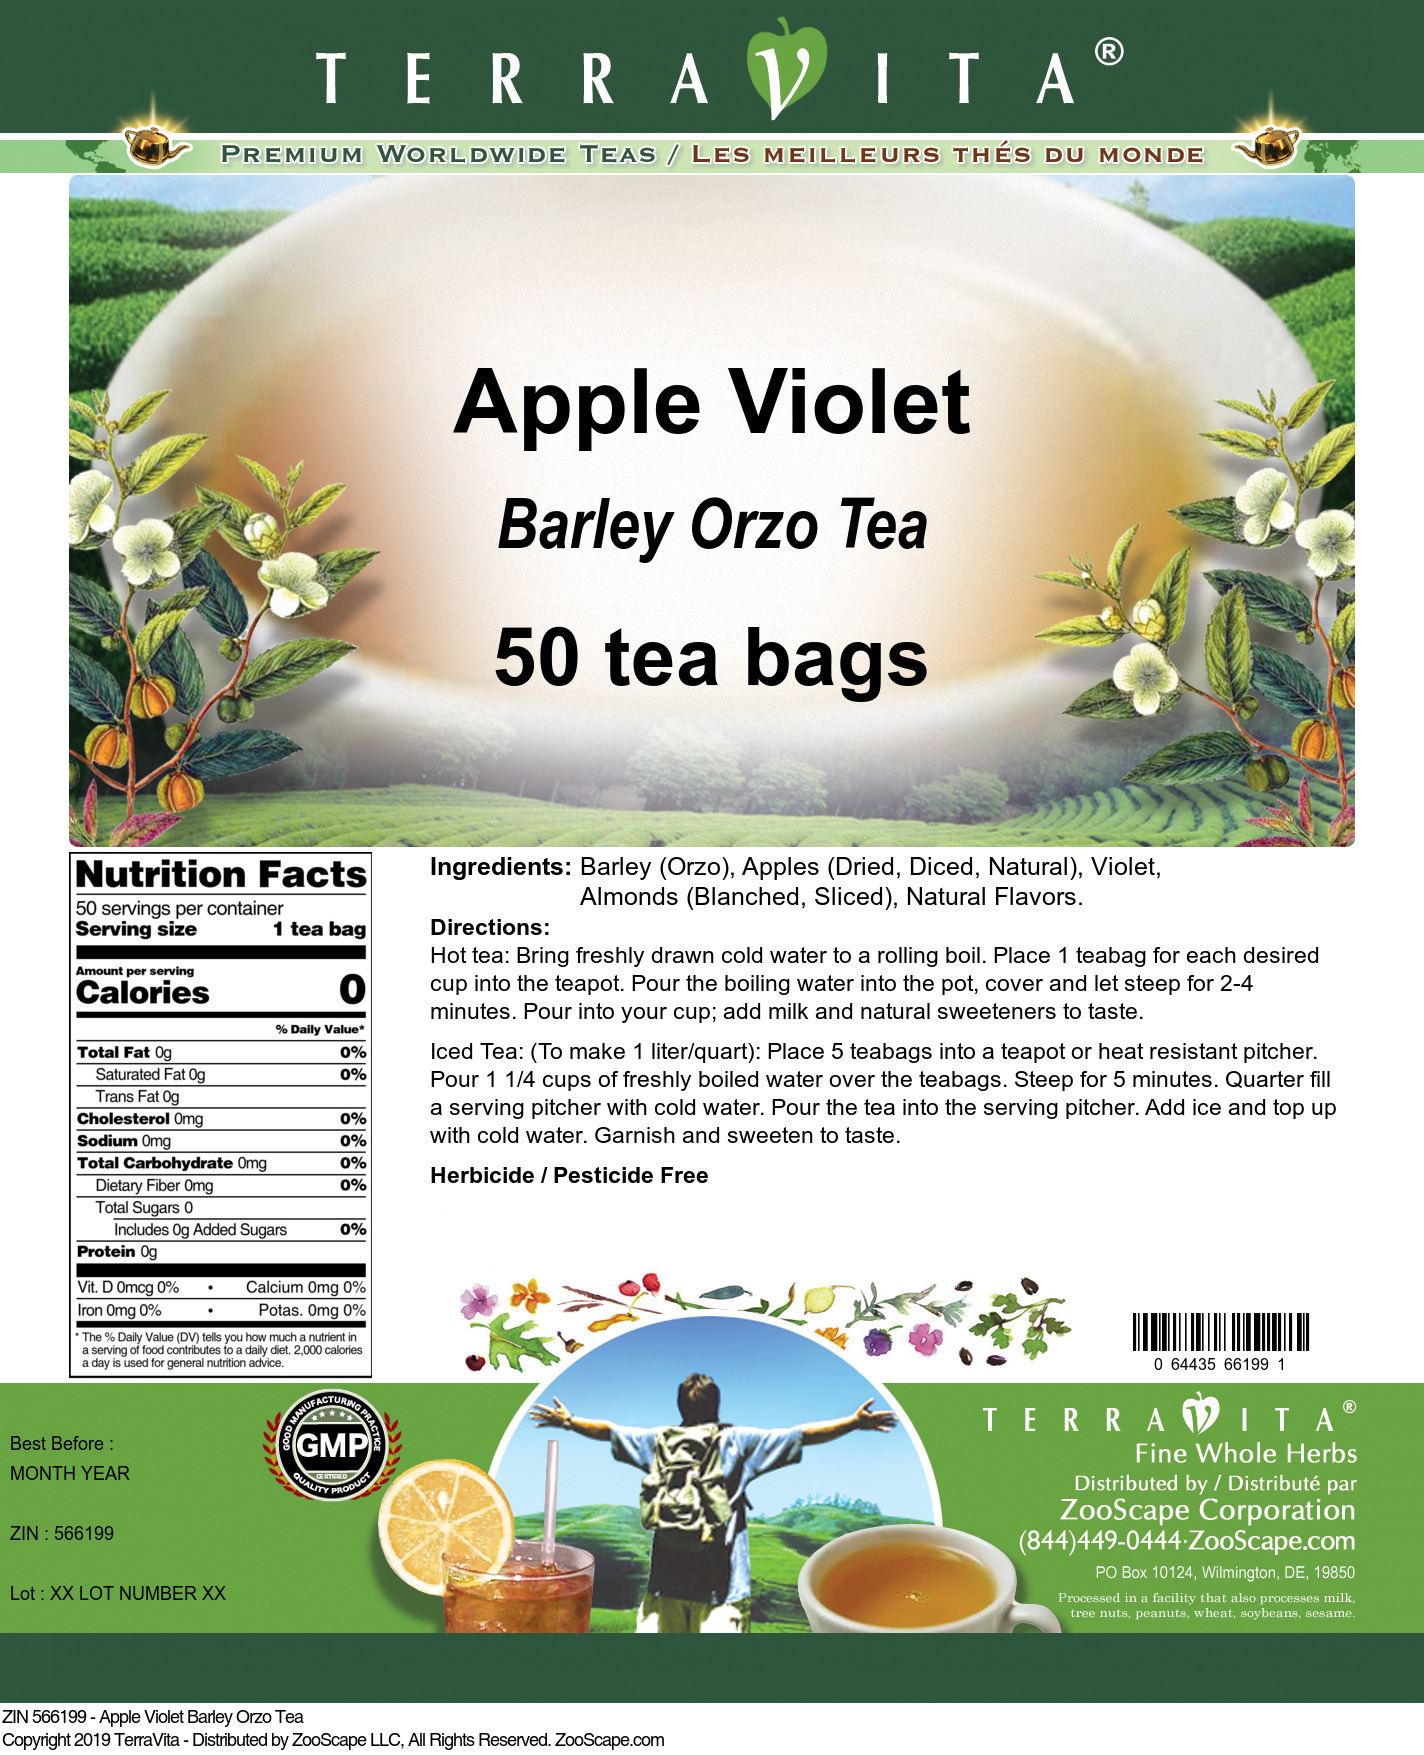 Apple Violet Barley Orzo Tea - Label